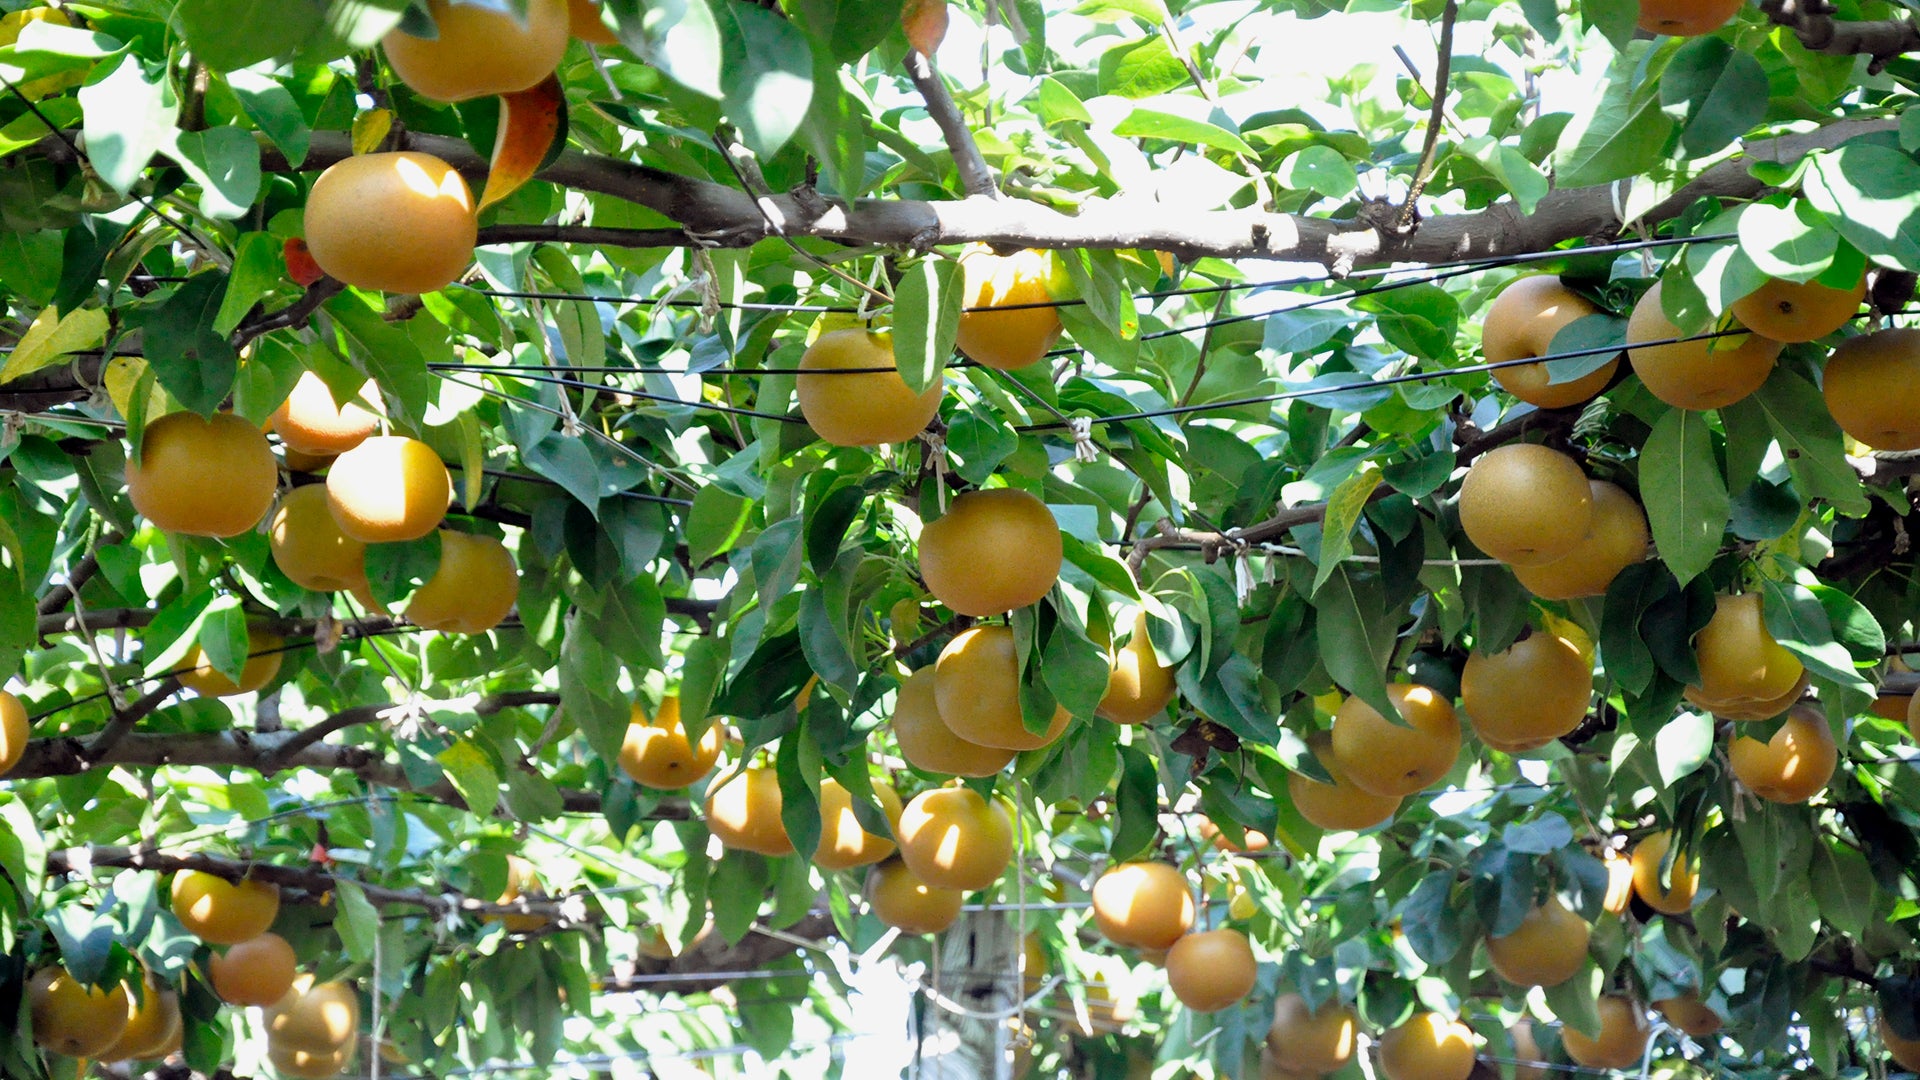 Japanese Pears (Nashi pears) on a tree